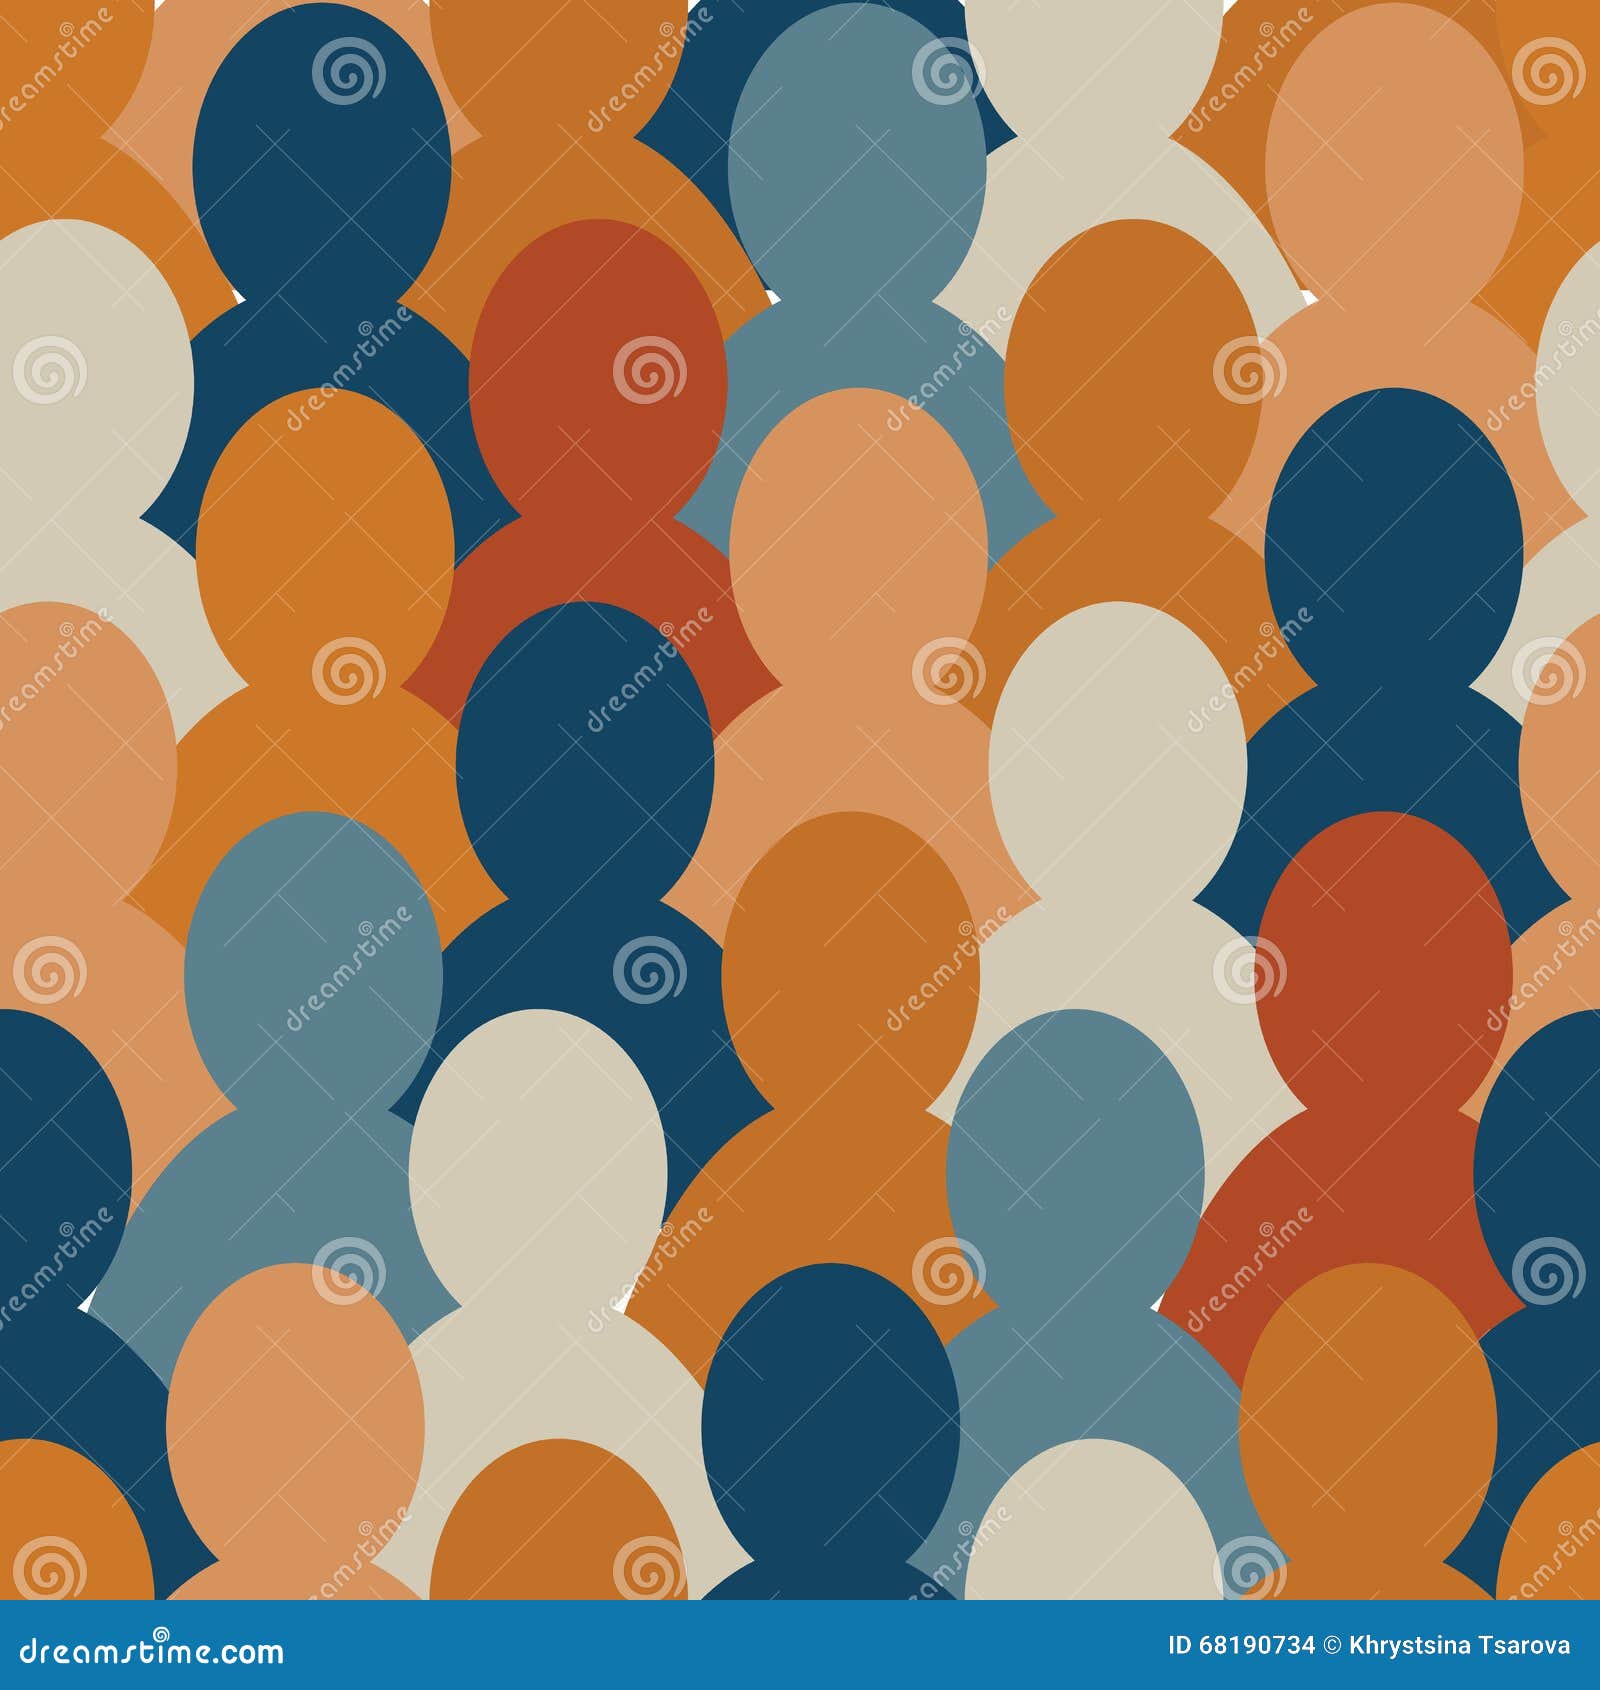 Cartoon crowd stock illustration. Illustration of orange - 68190734